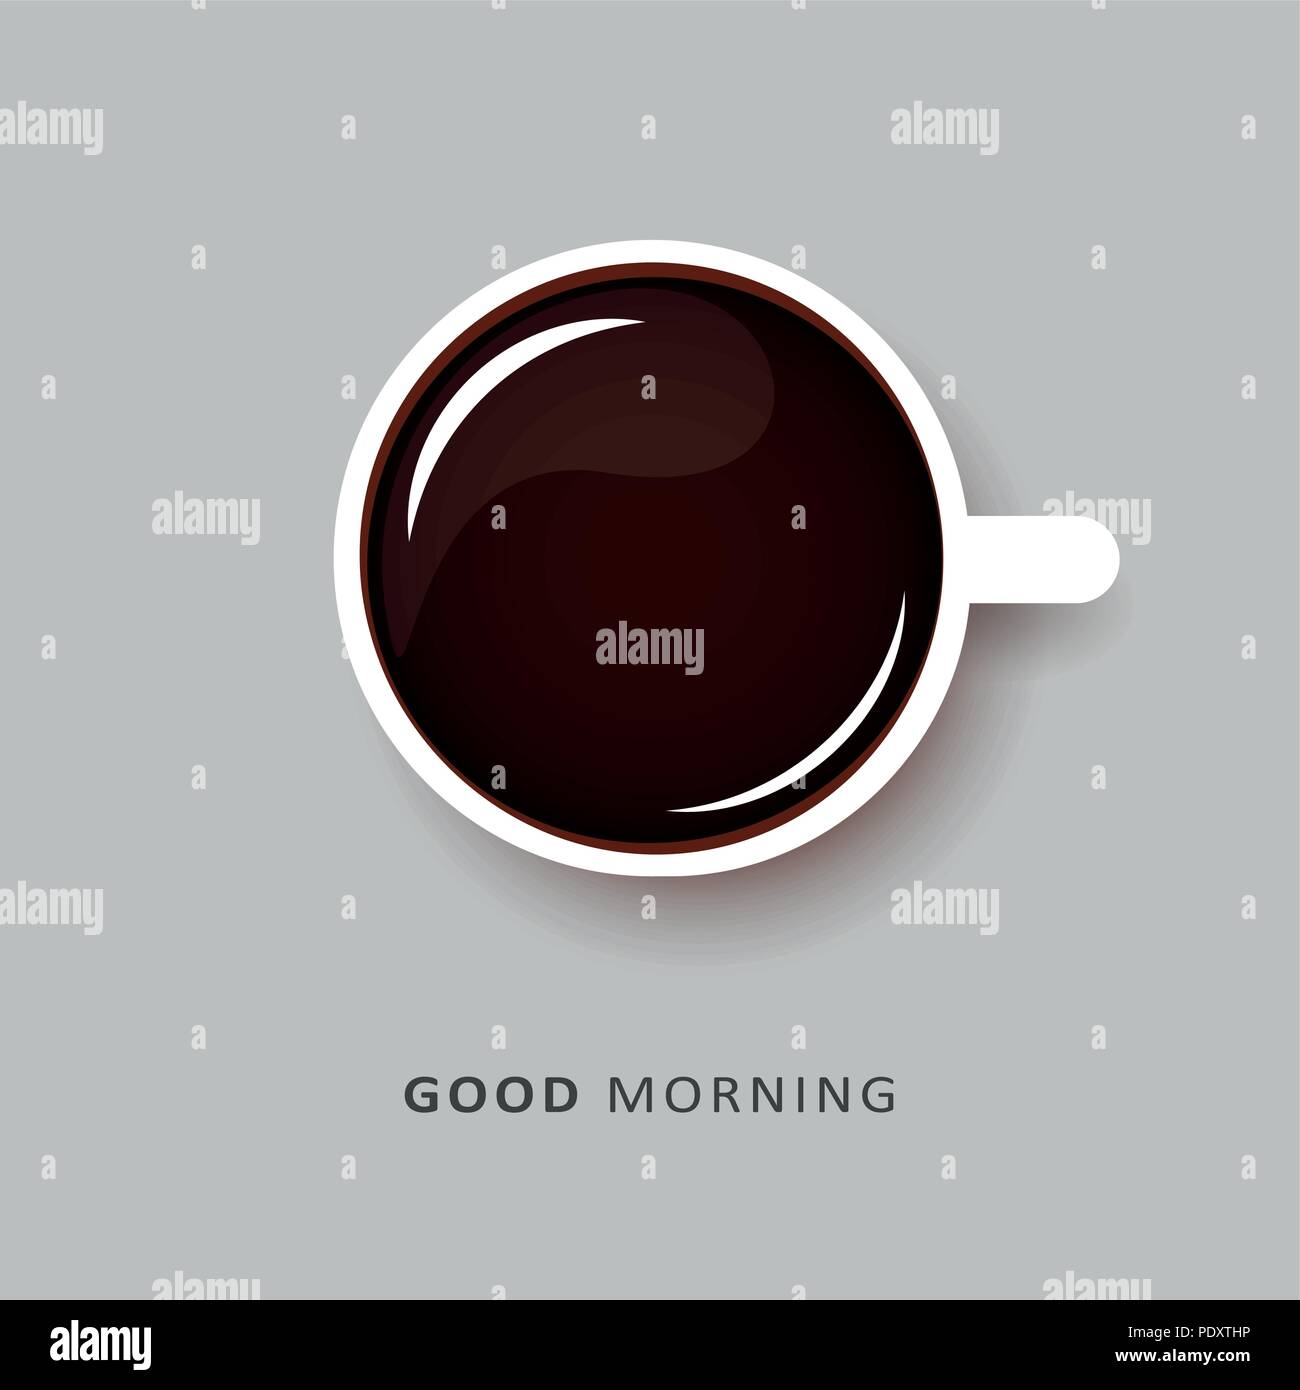 Guten Morgen schwarzer Kaffee in weisser Tasse Vektor-illustration EPS 10. Stock Vektor